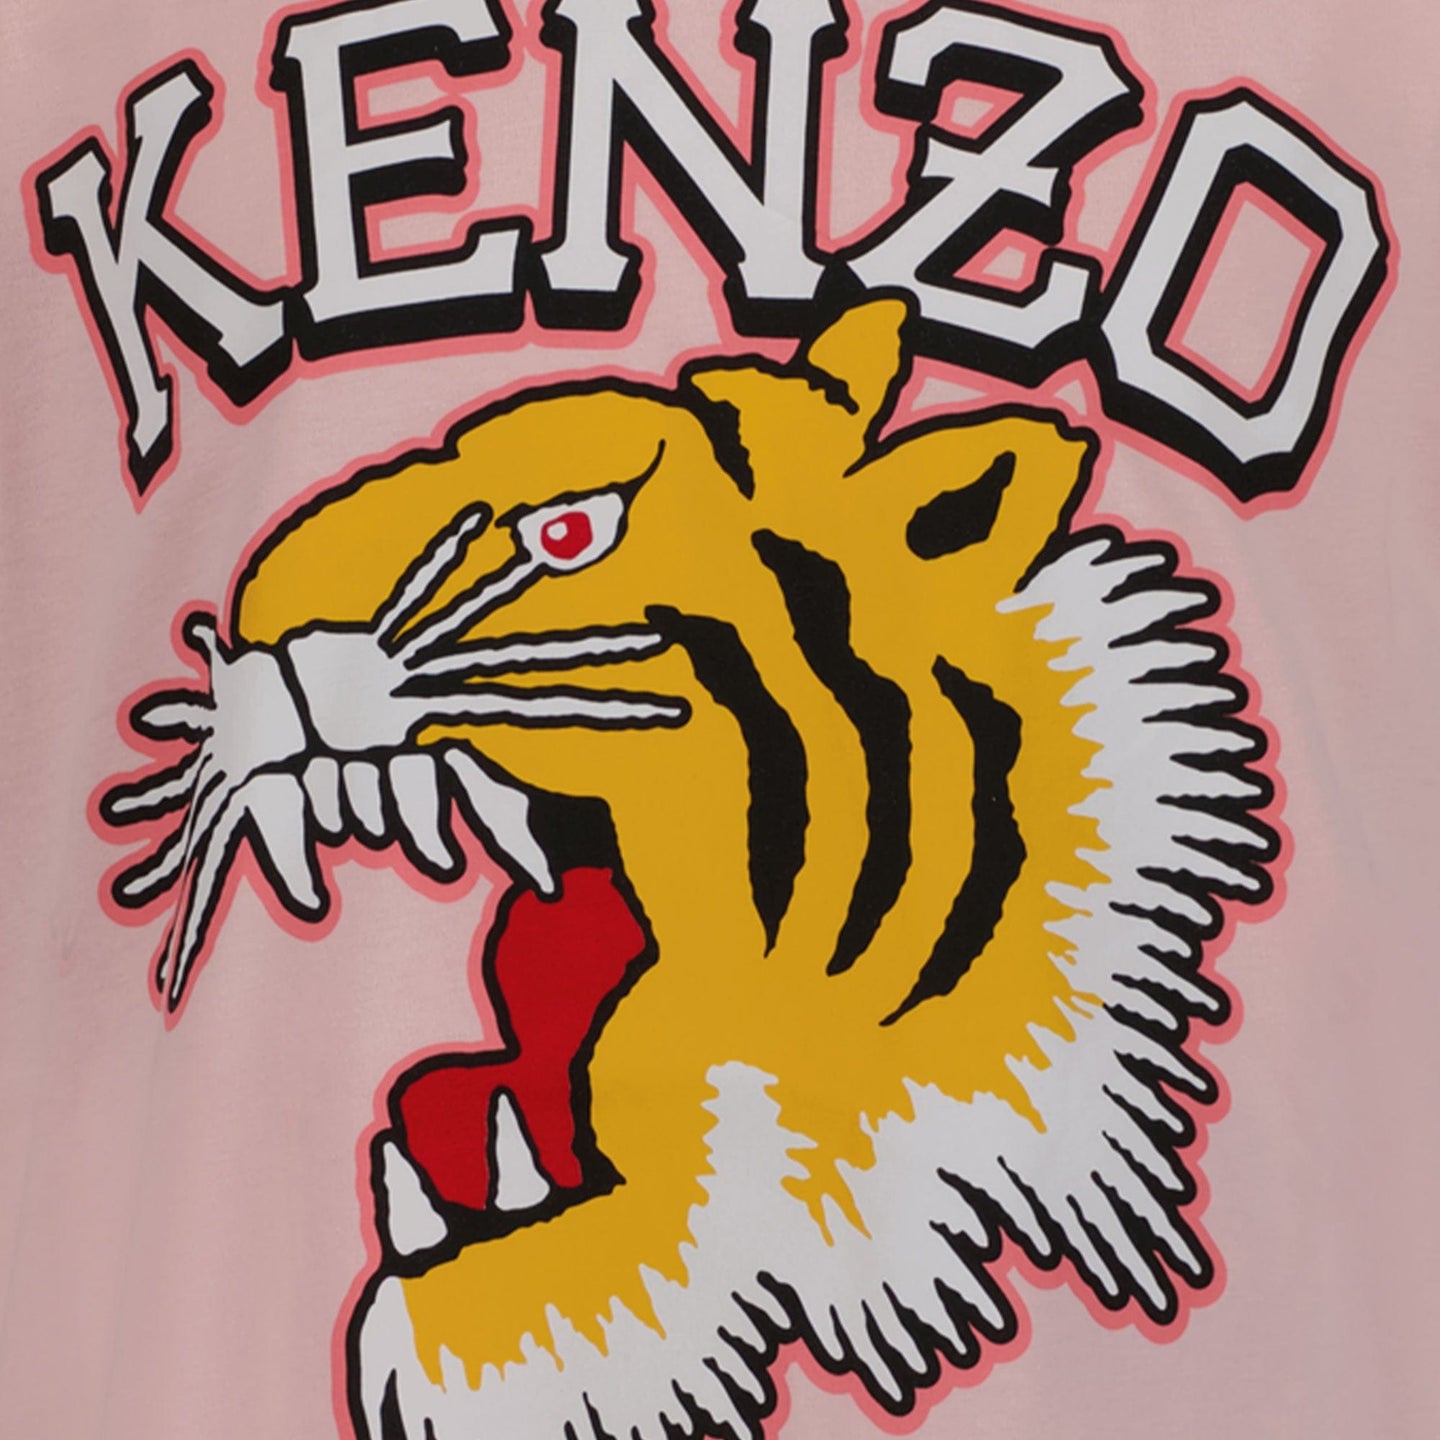 Kenzo Kids Unisex T-shirt Licht Roze 4Y